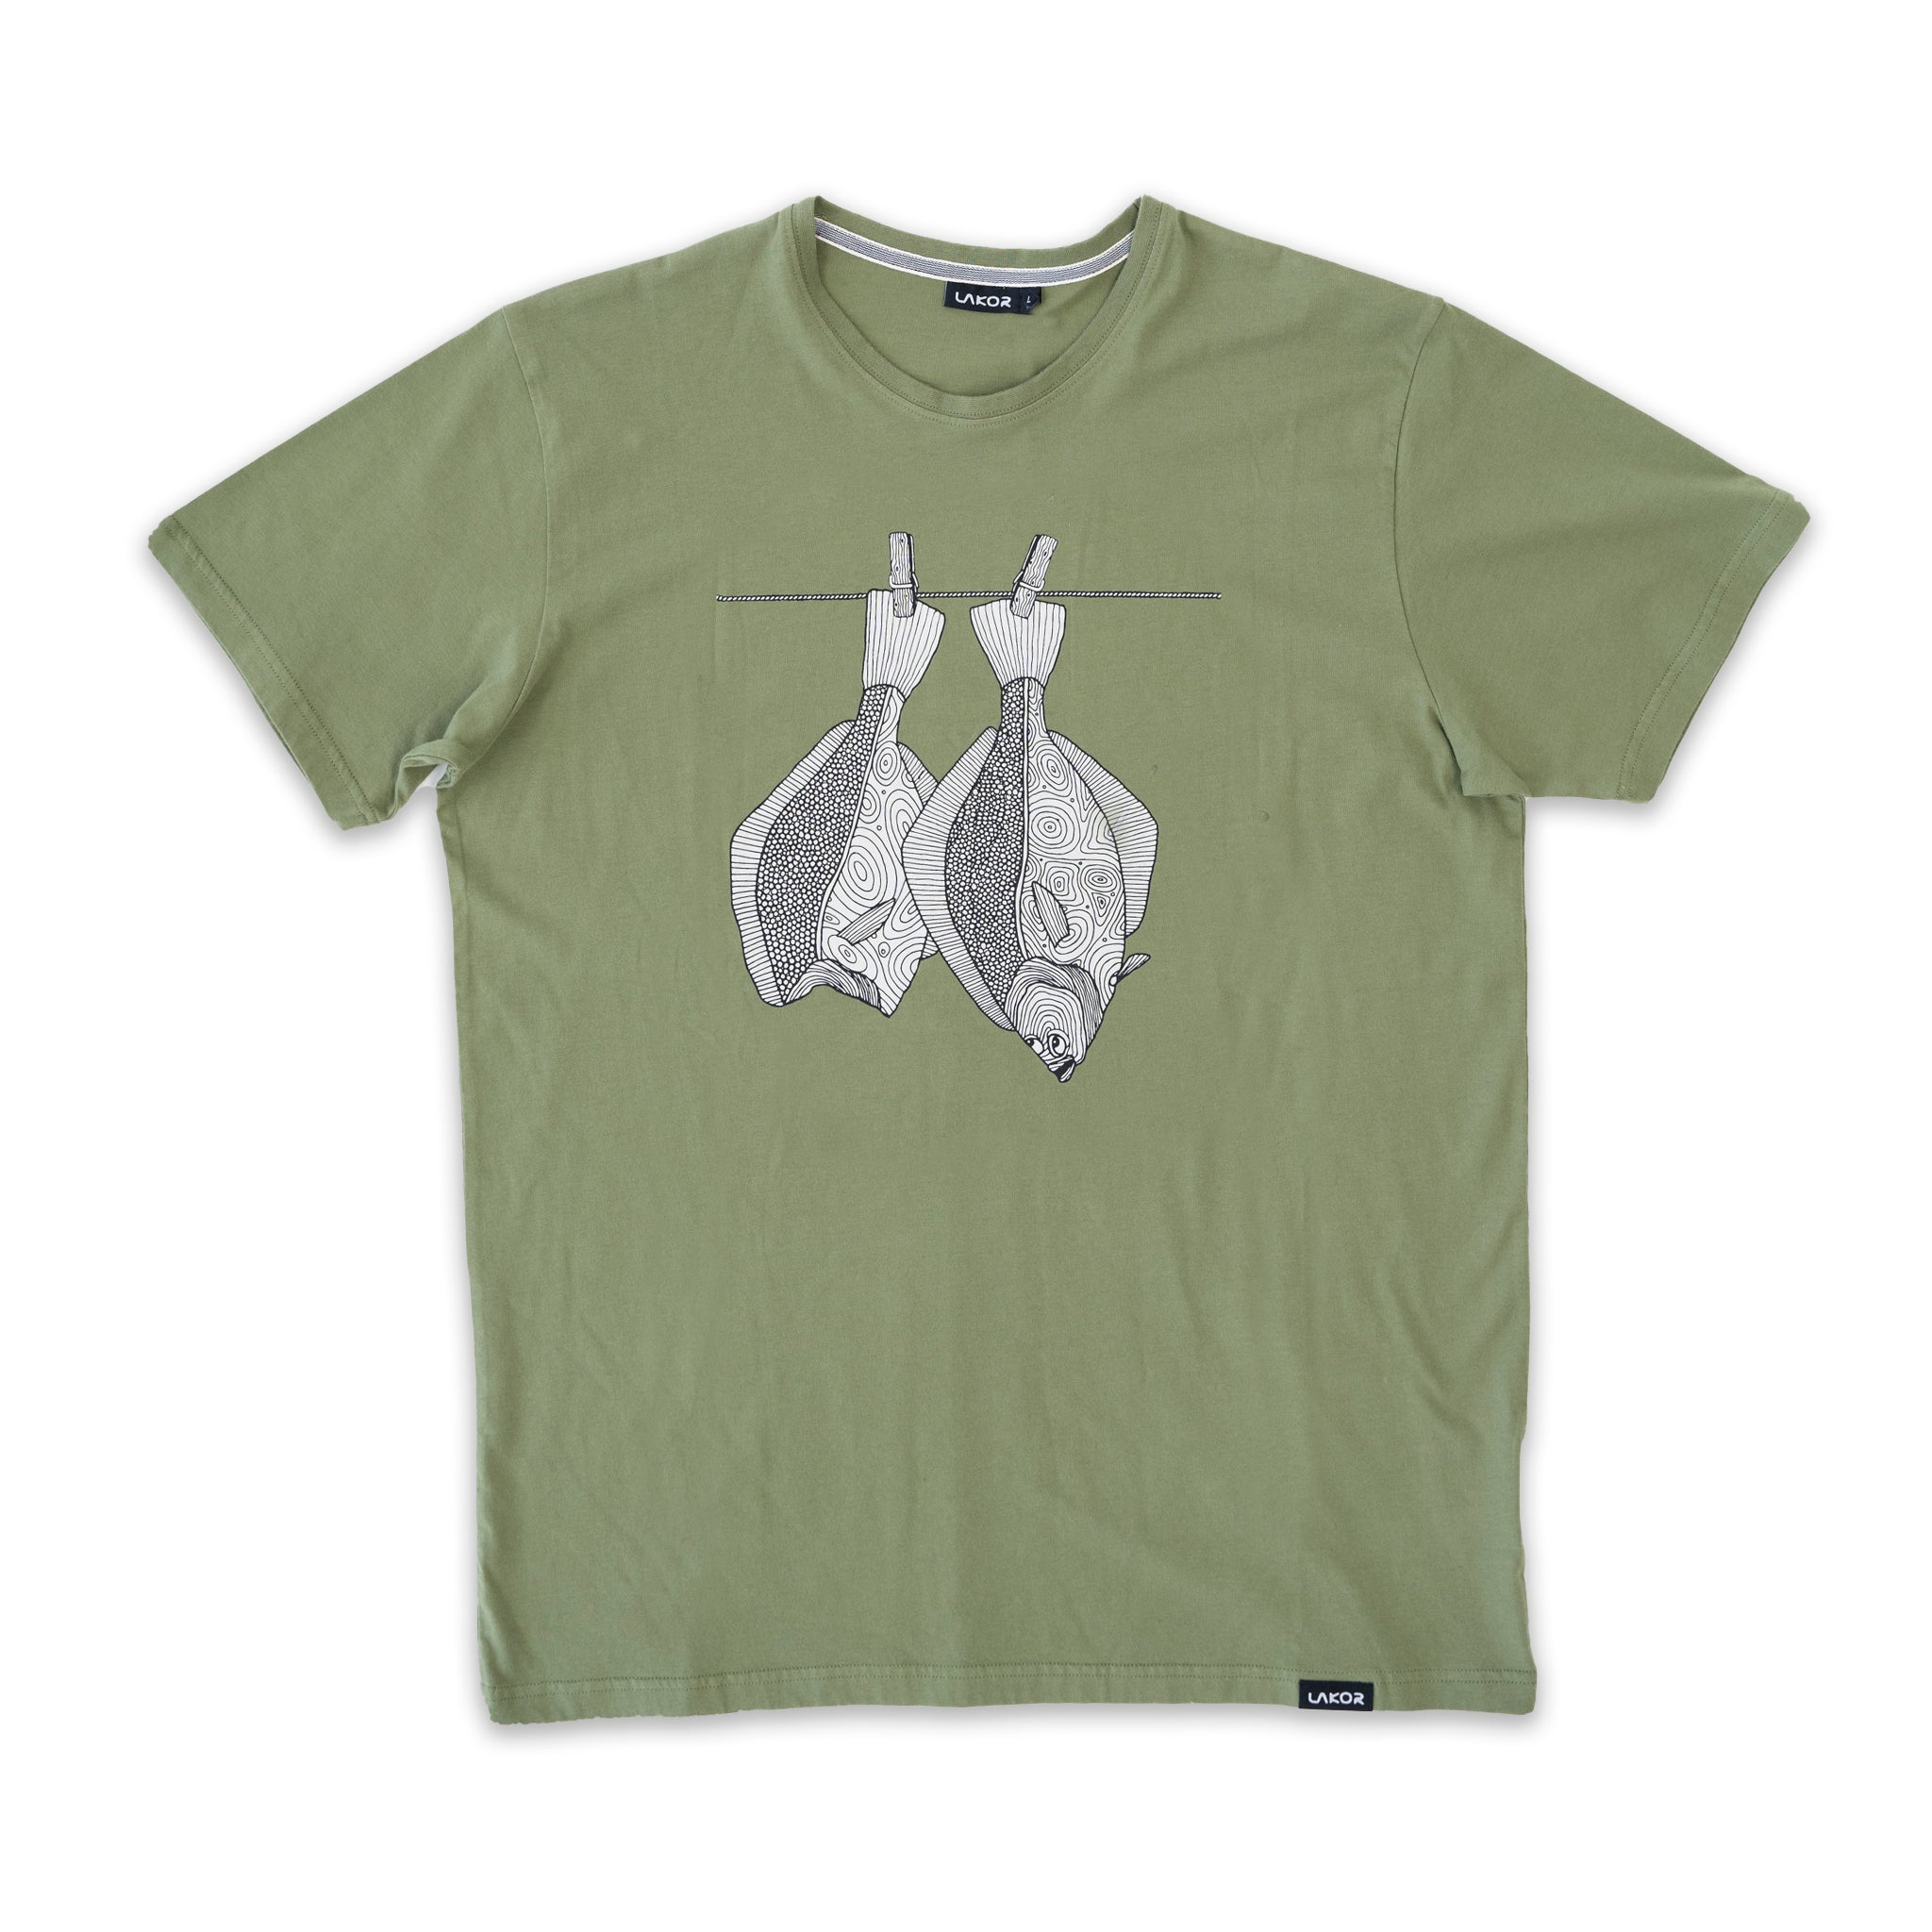 Dabs T-shirt (Green)